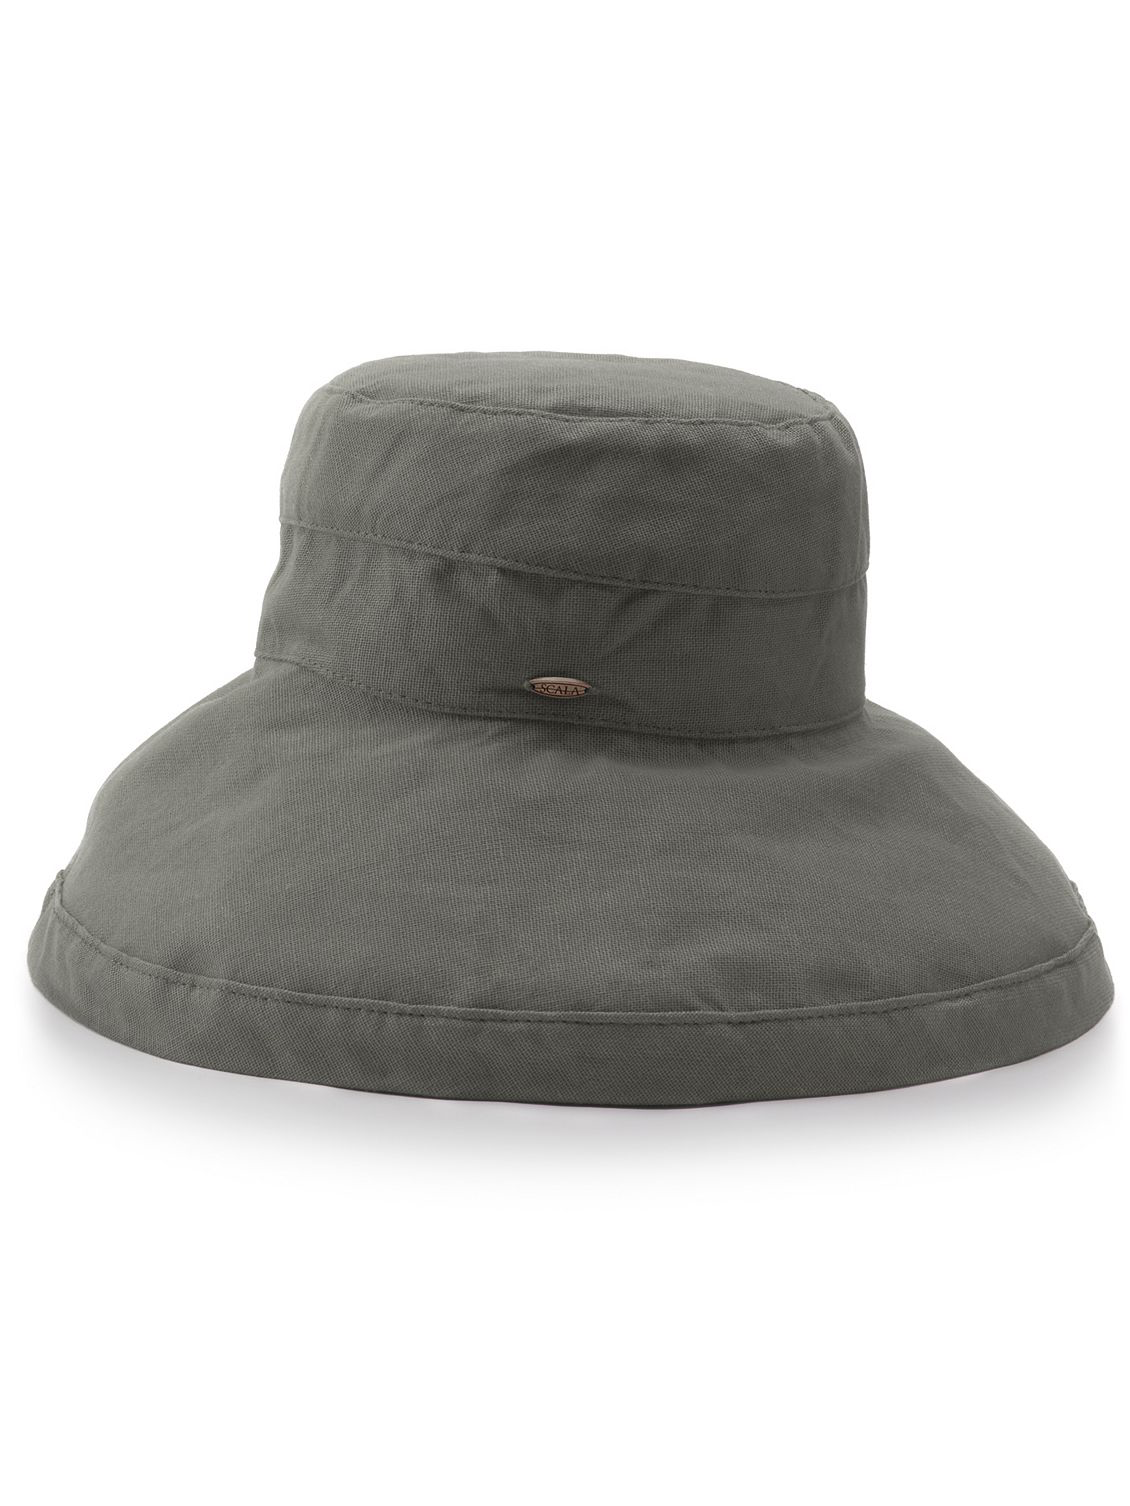 Scala/Dorfman Big Brim Cotton Sun Hat | Olive